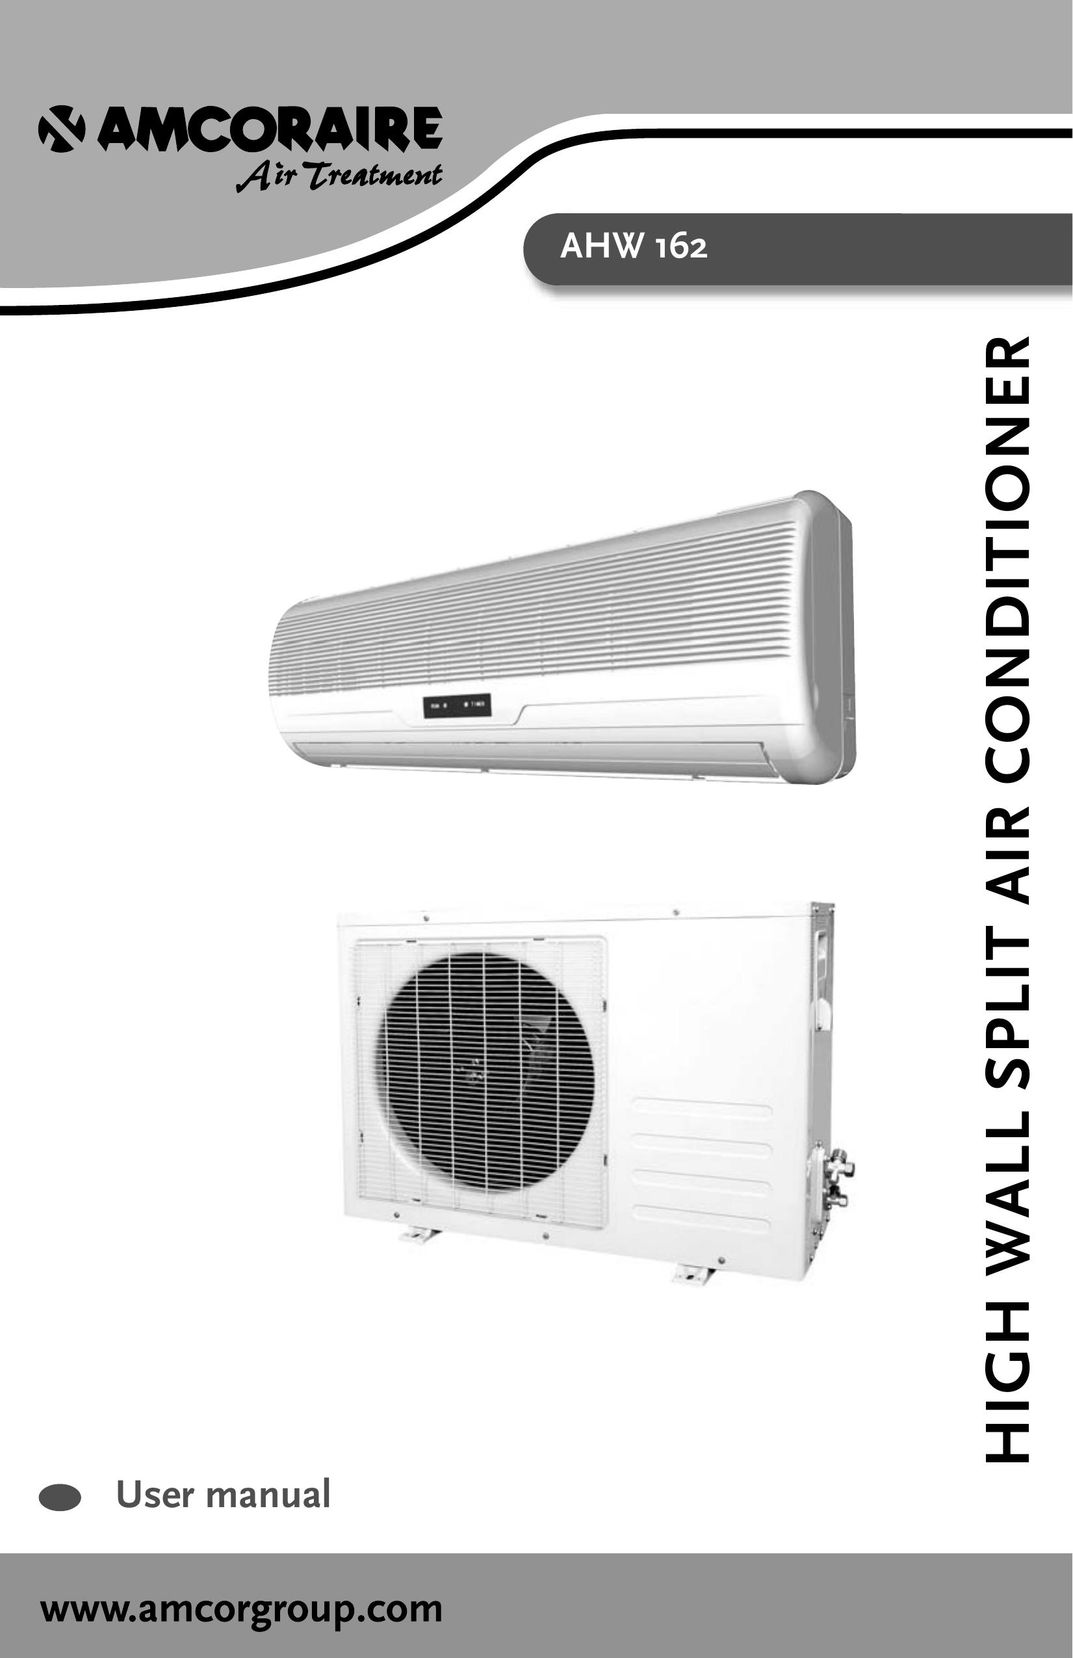 Amcor AHW 162 Air Conditioner User Manual